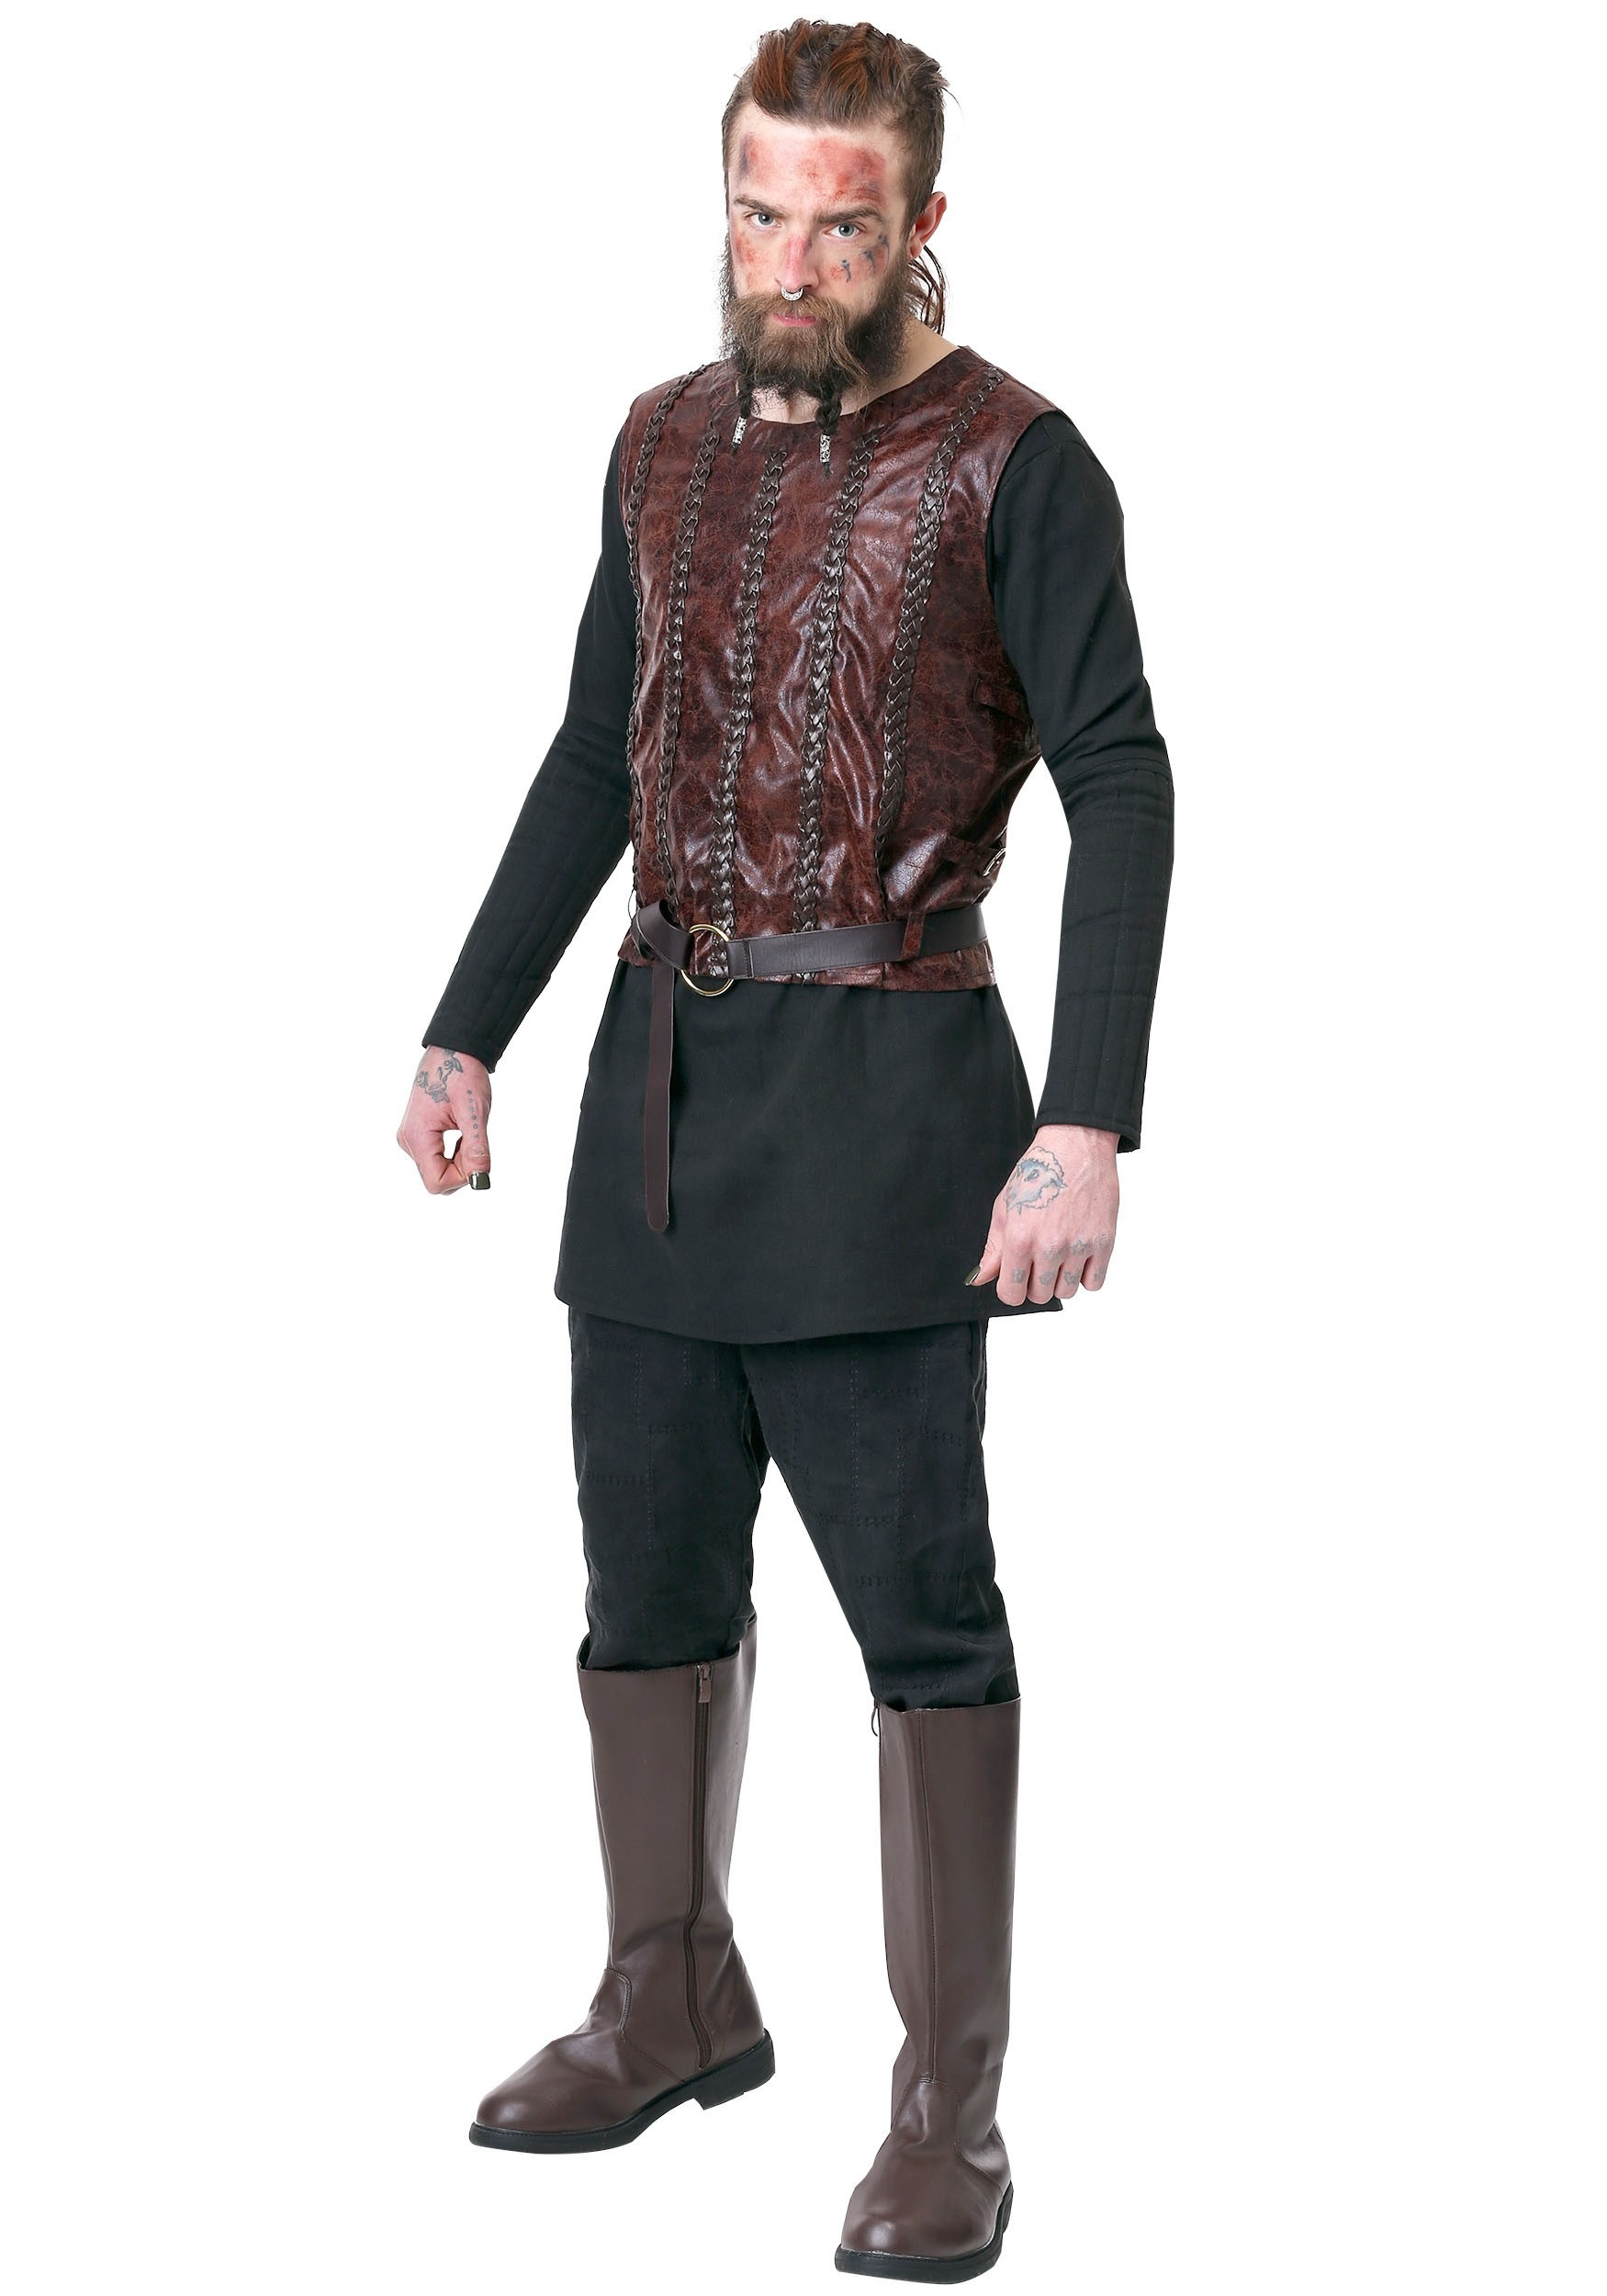 Photos - Fancy Dress FUN Costumes Vikings Adult Bjorn Ironside Costume Black/Brown FUN6880A